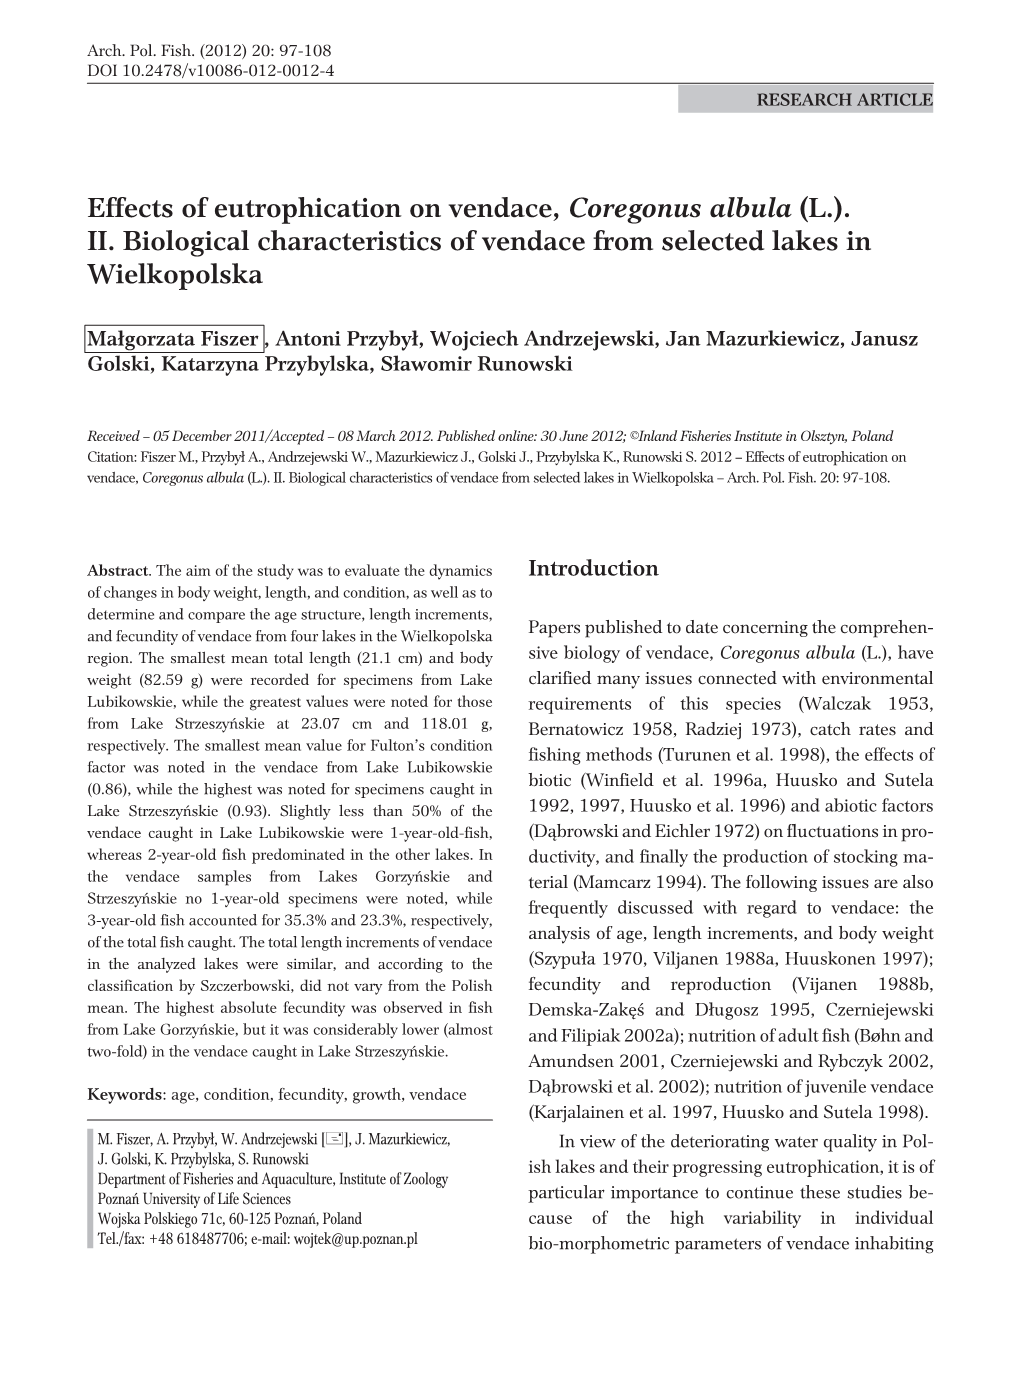 Effects of Eutrophication on Vendace, Coregonus Albula (L.)